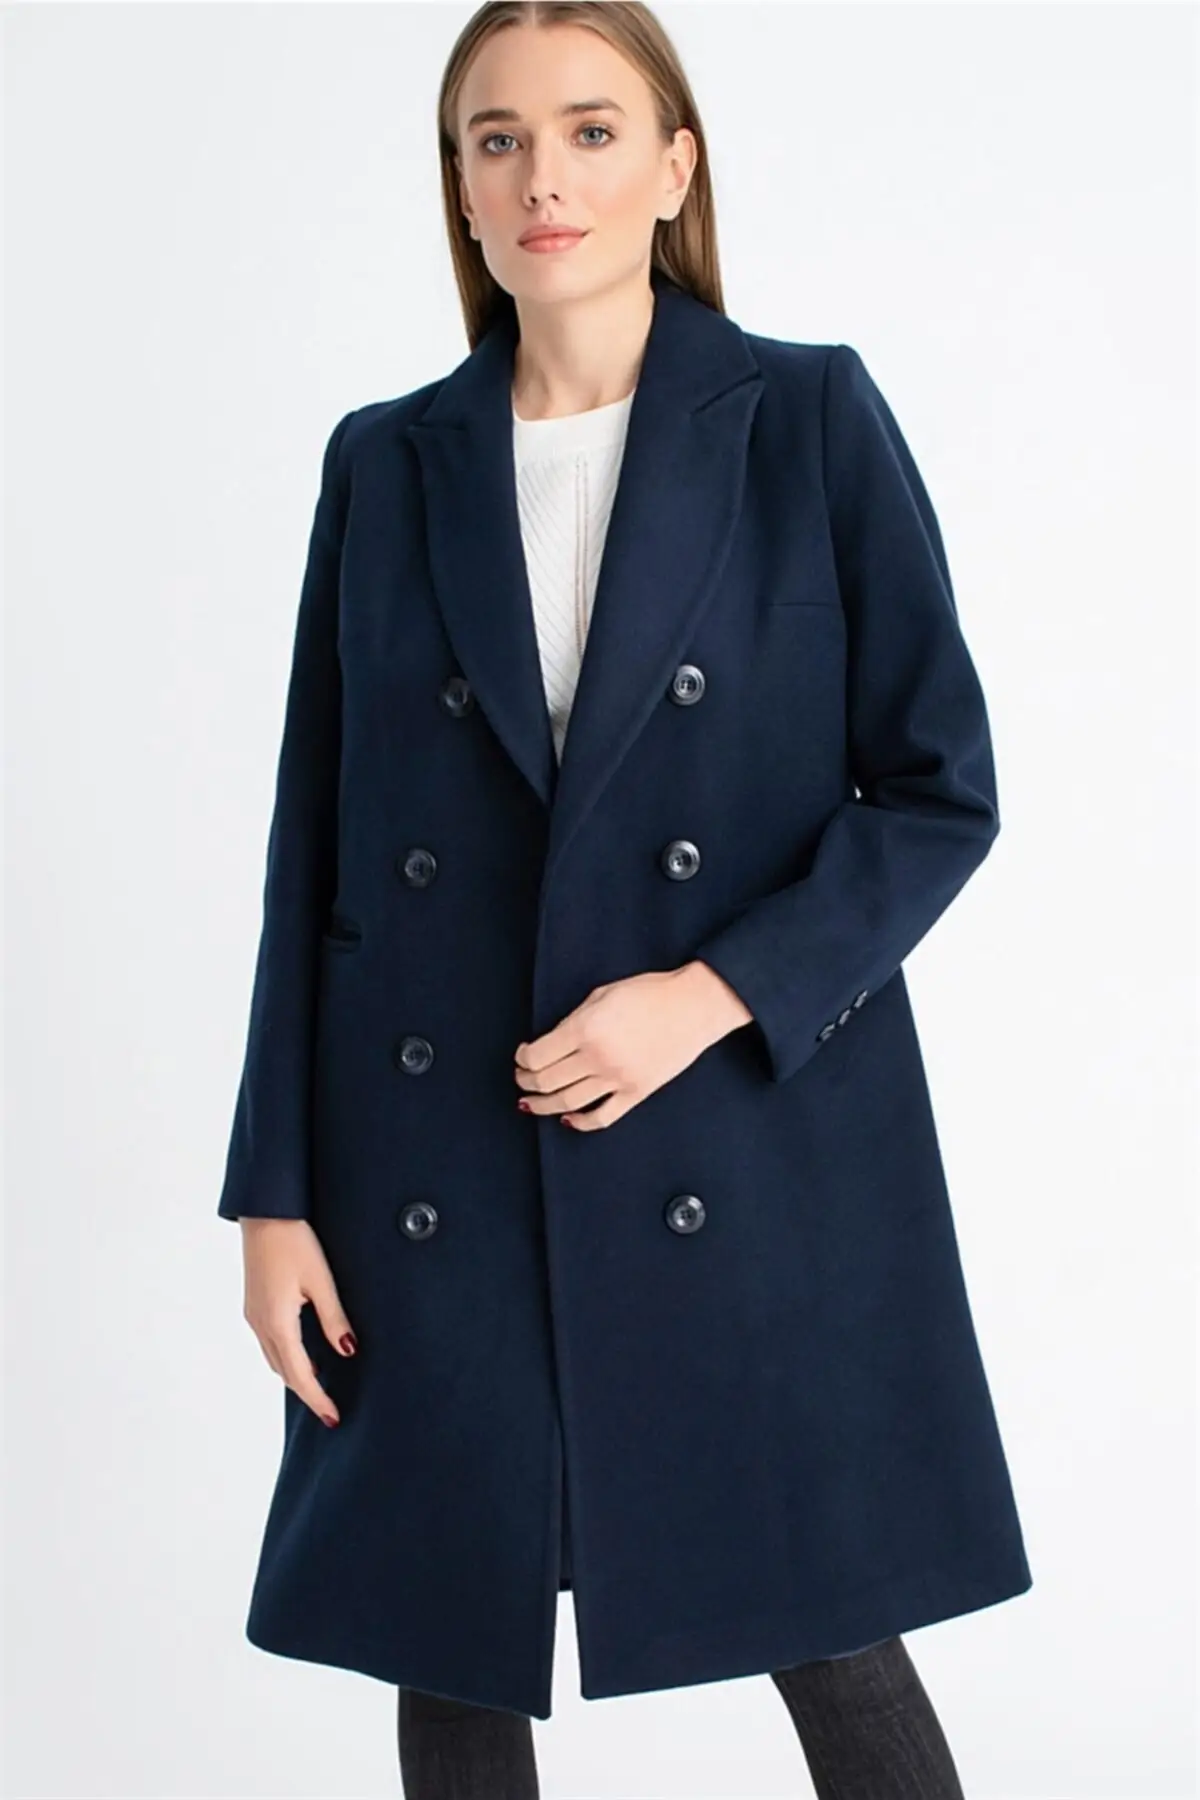 Women's Coat Navy Blue Coat Sleeve Buttoned Long Thick Stylish Elegant Useful 2021 Winter Autumn Fashion Outerwear Coats